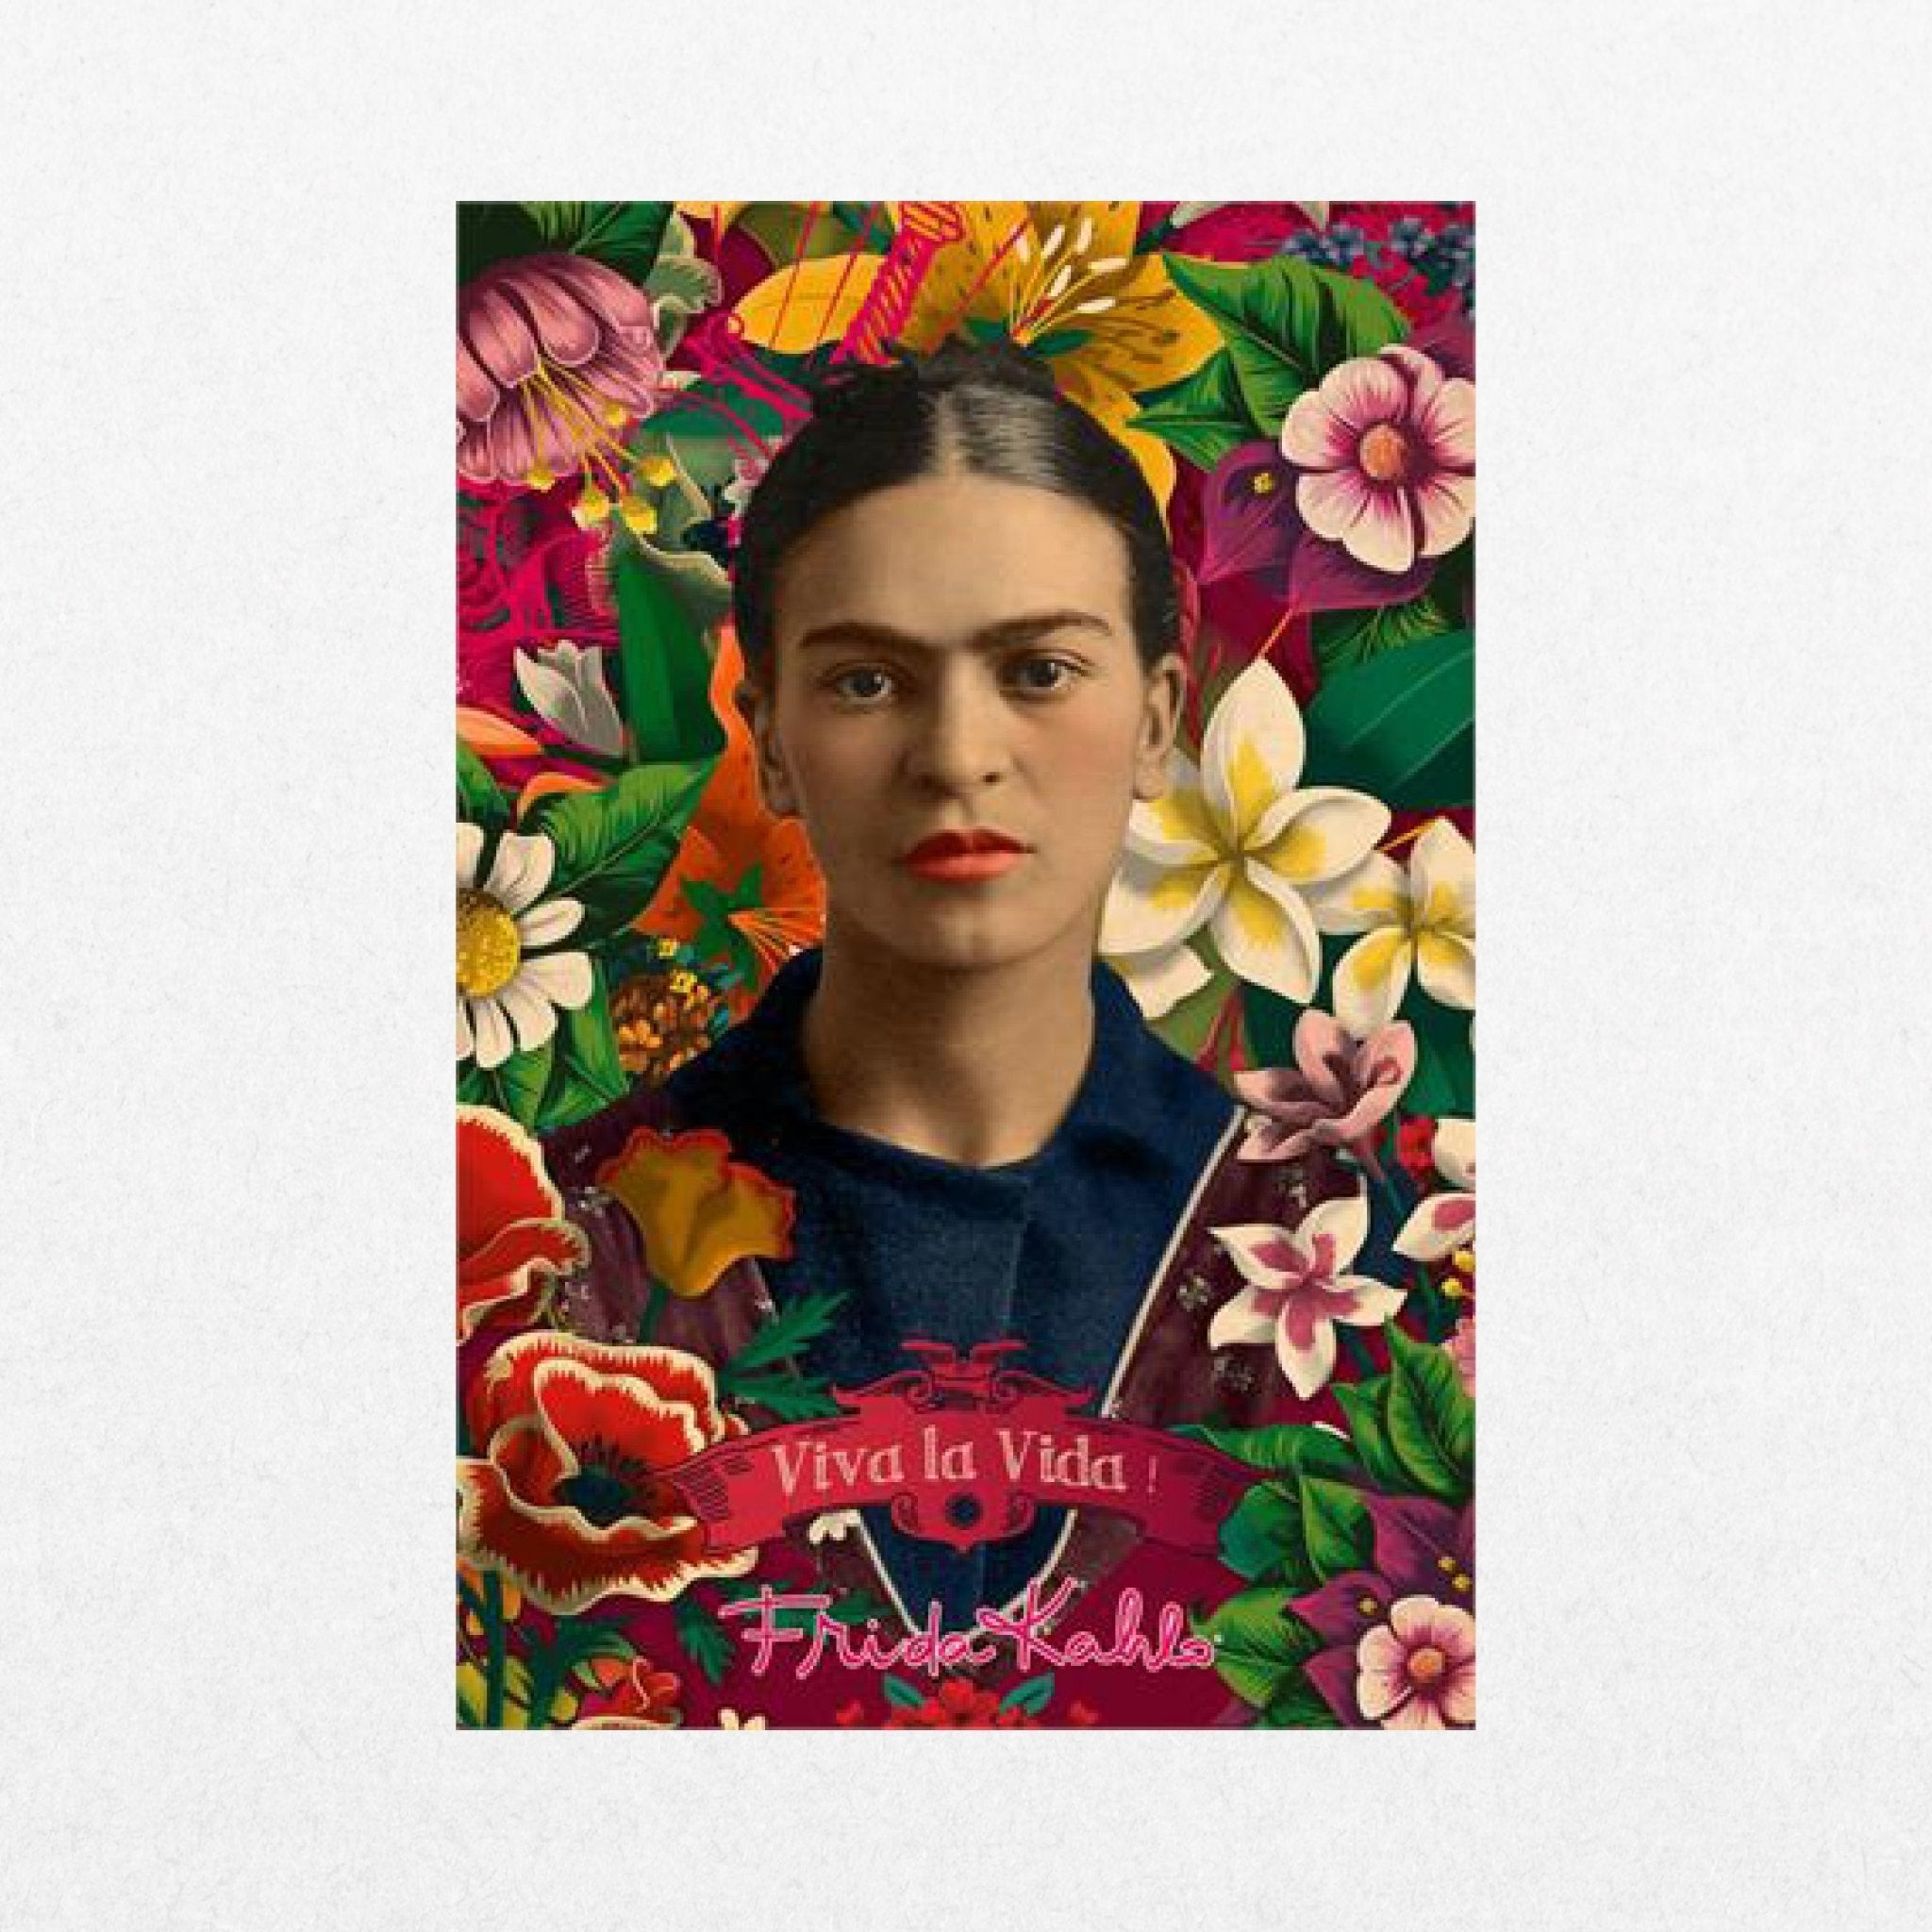 Frida Kahlo - Viva La Vida - El Cartel